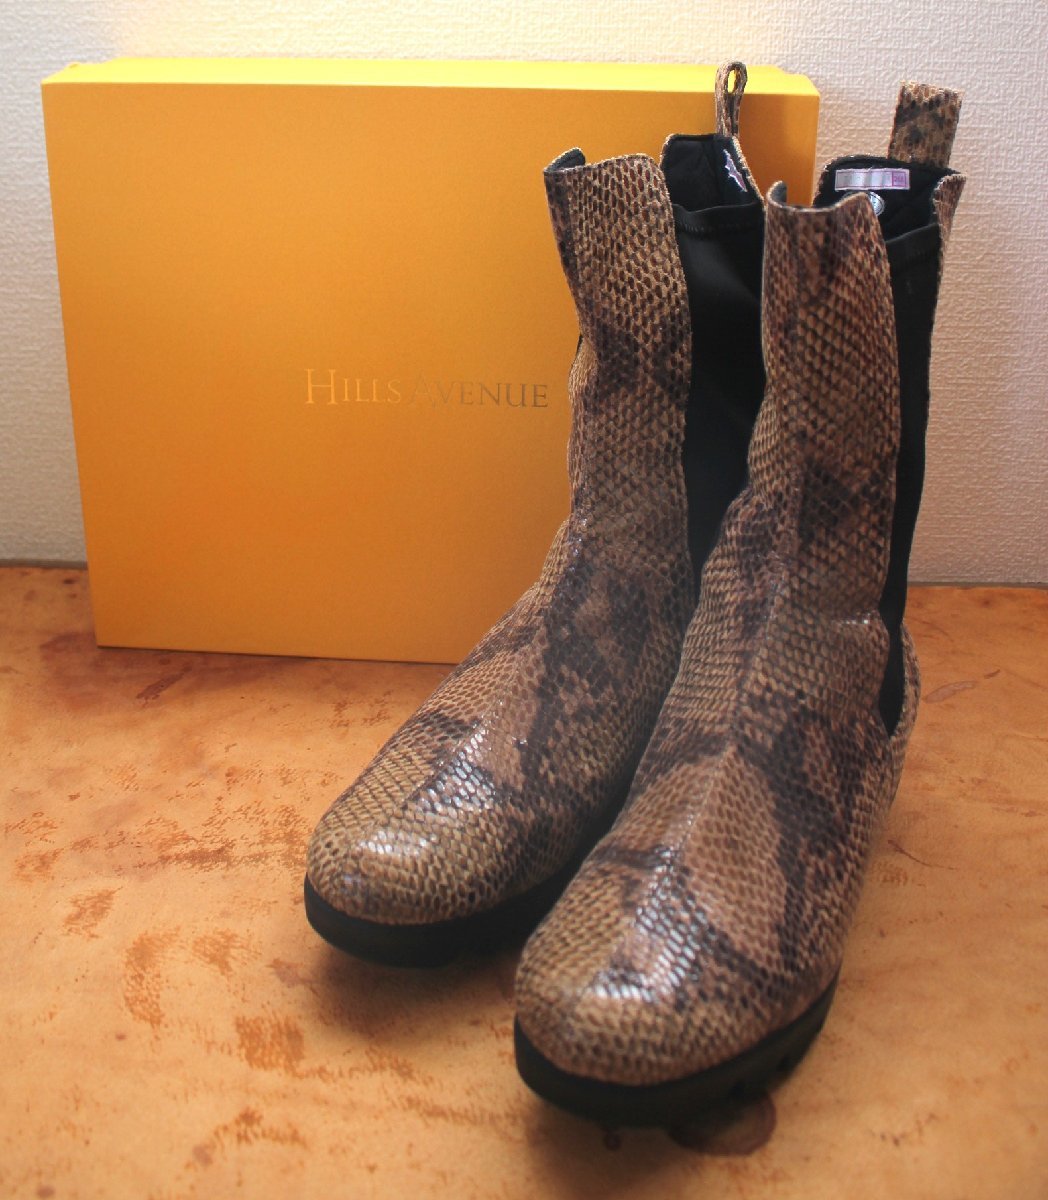 ★ Hills Avenue/Hills Avenue "Python Pattern Side Gore Boots Size24,5 см" gplus hiroshima 2311s2